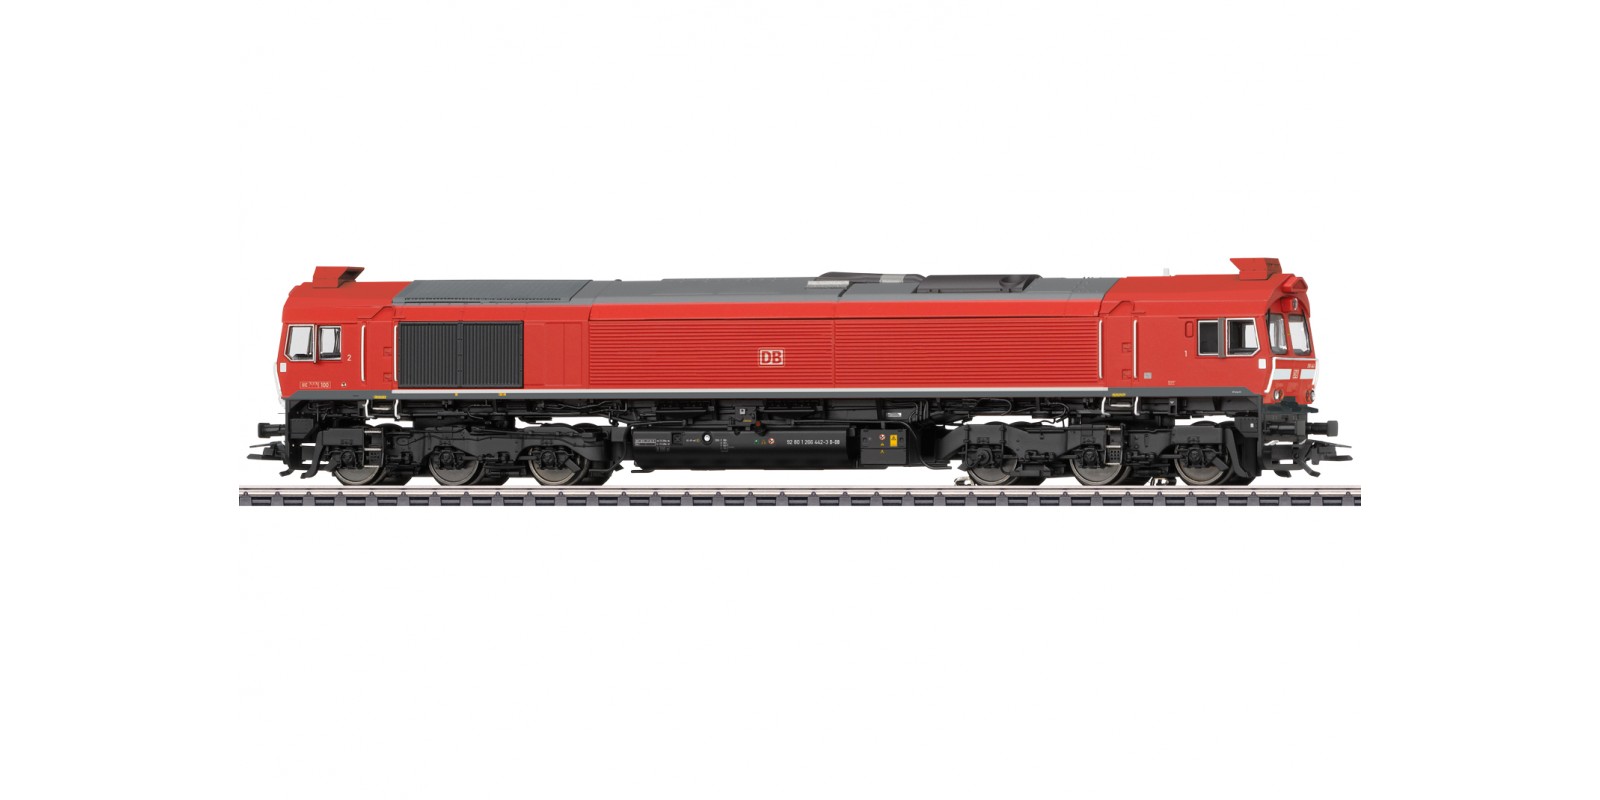 39070 Class 77 Diesel Locomotive